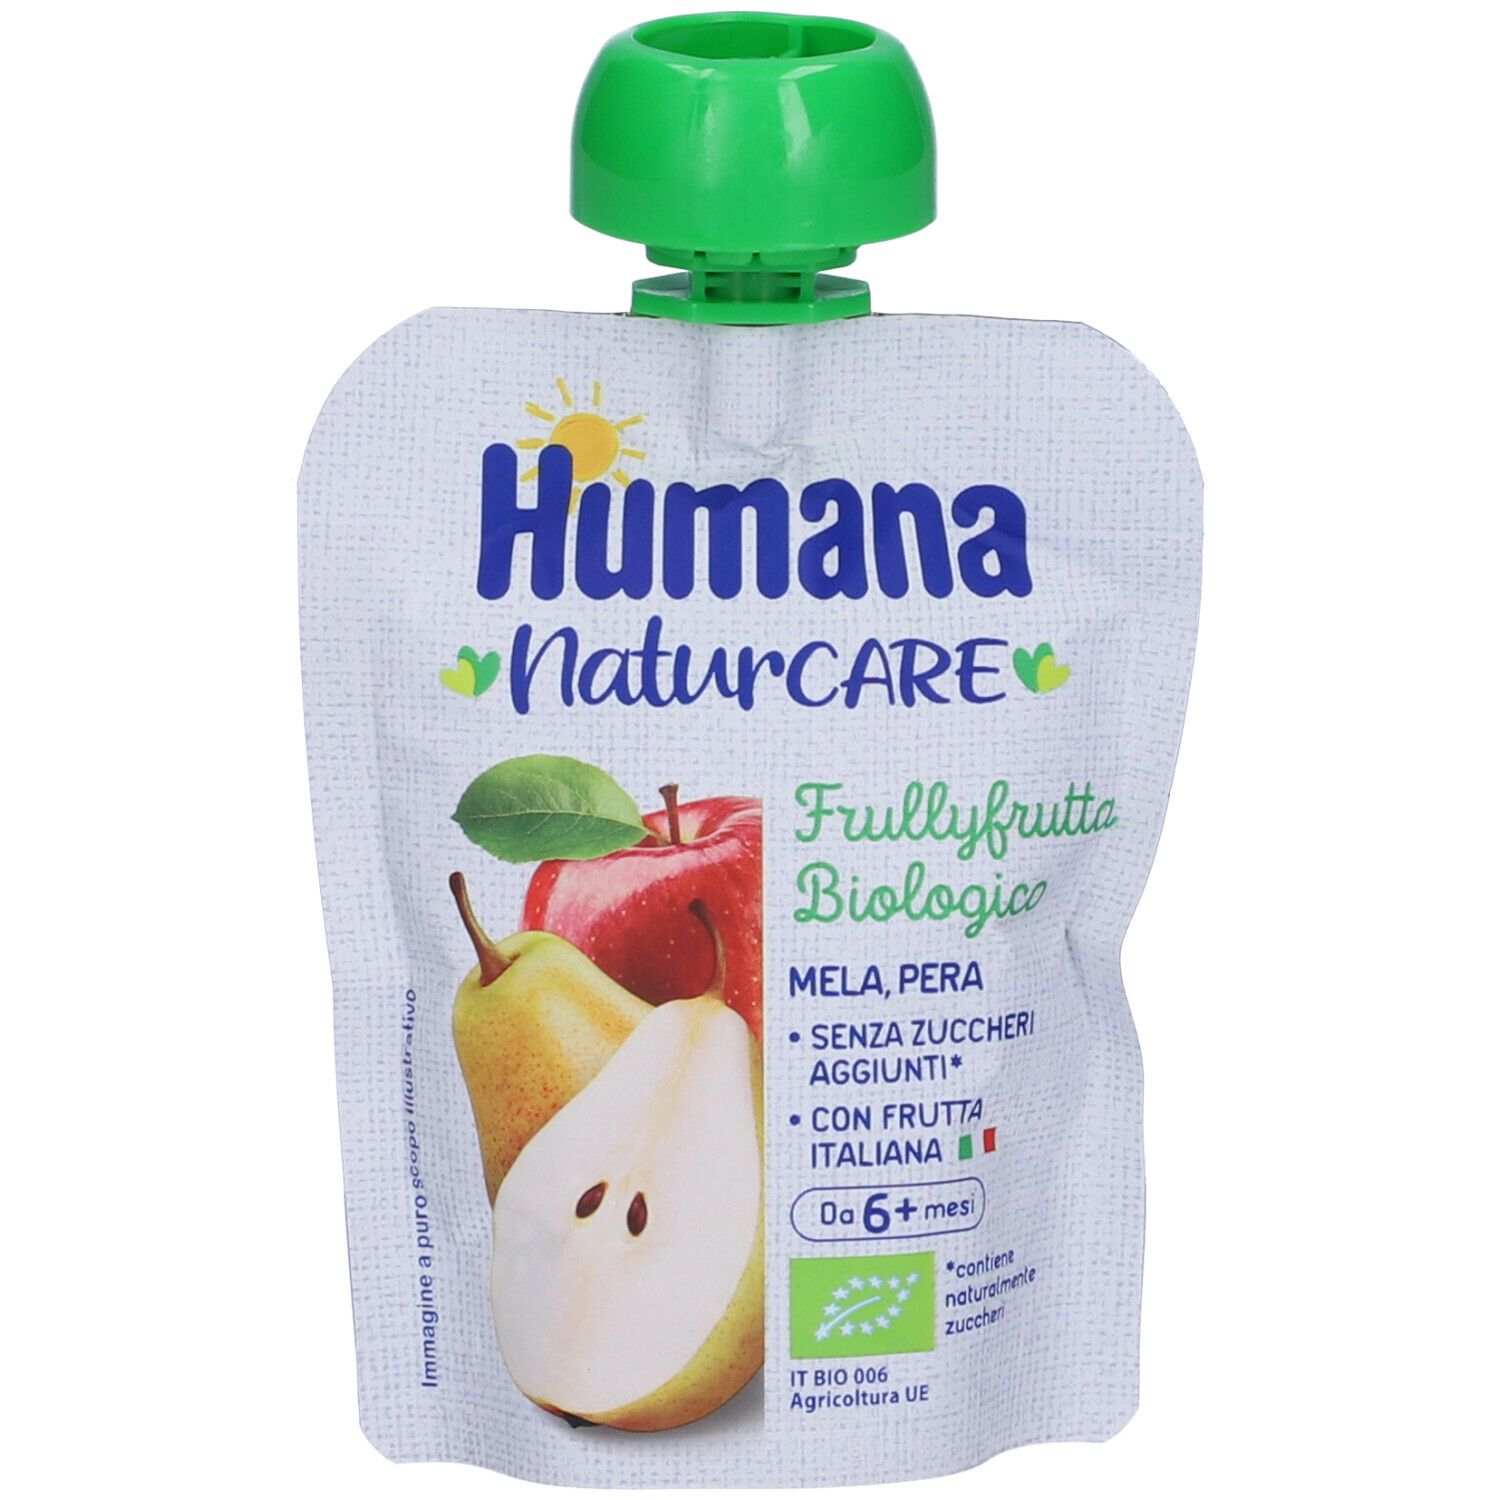 Image of Humana frullyfrutta mela, pera